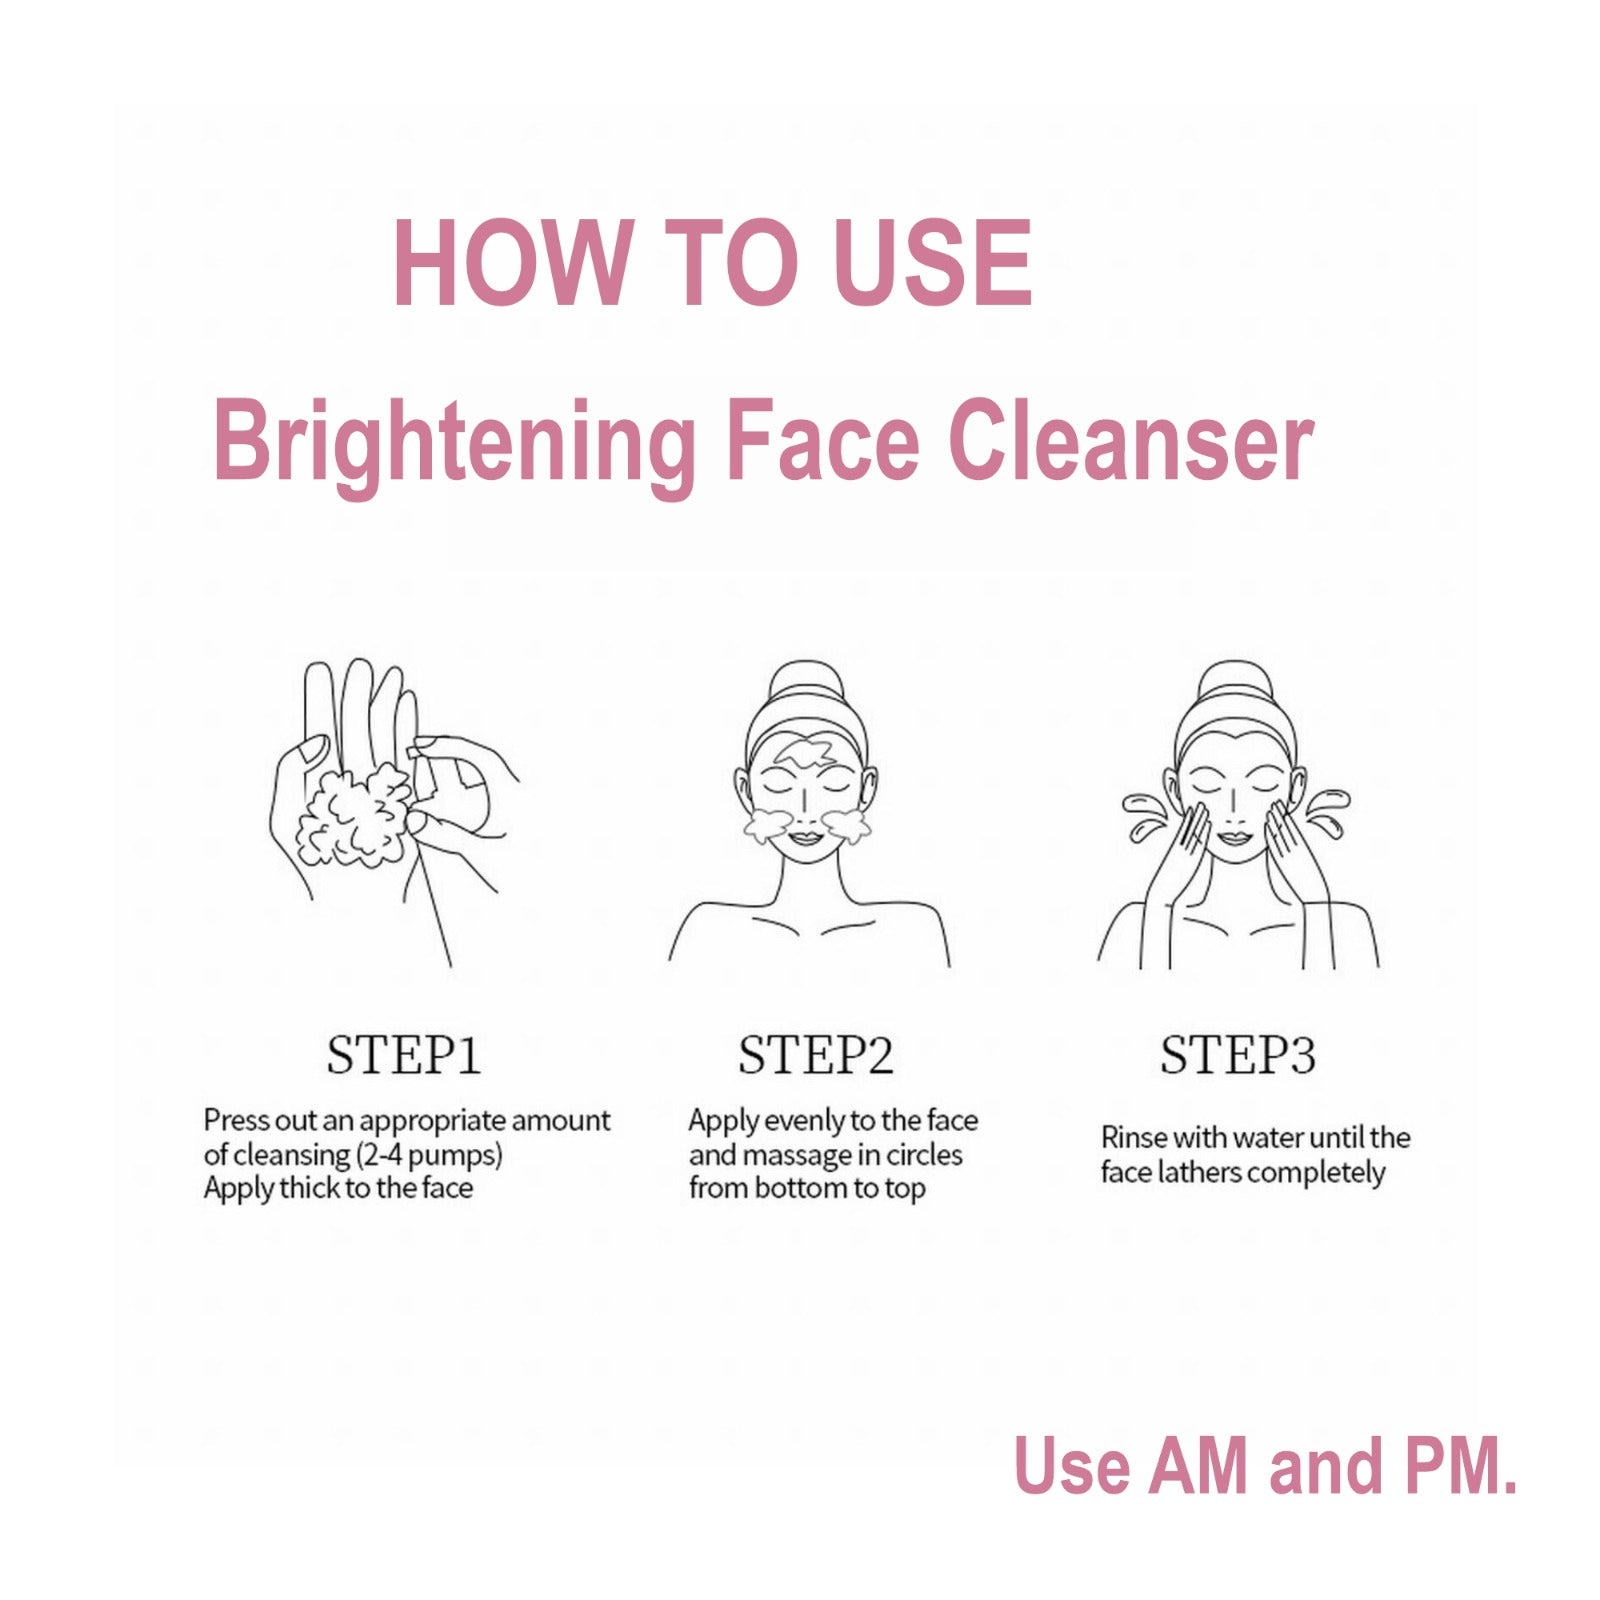 Brightening Face cleanser